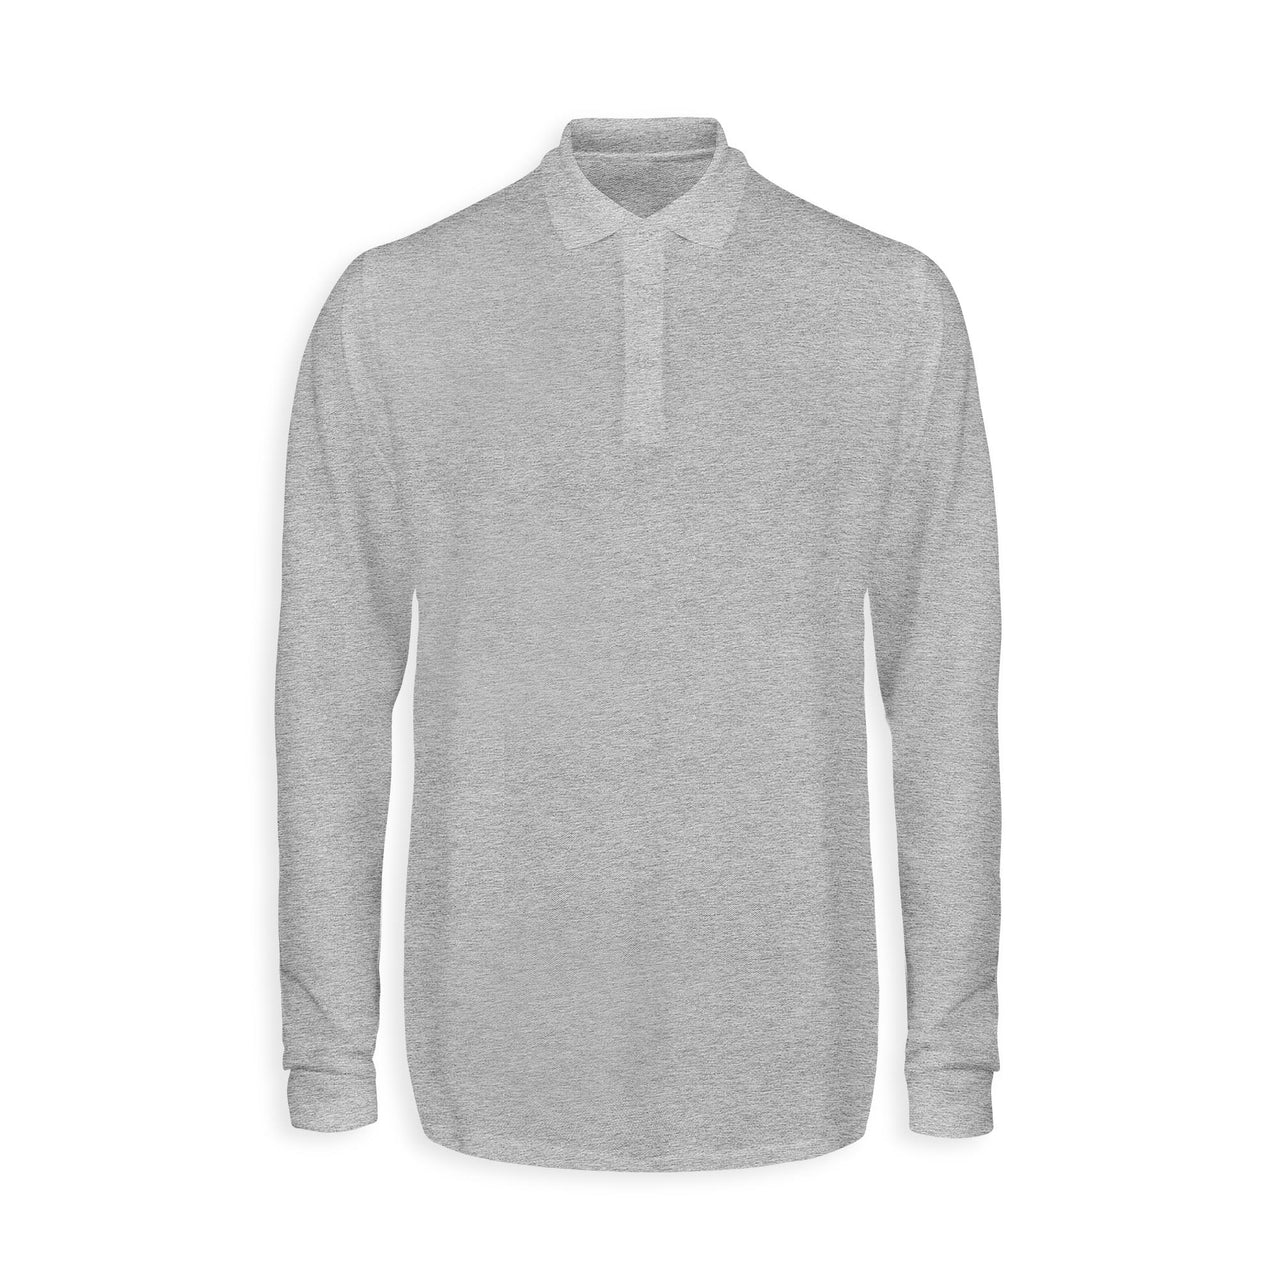 NO Design Super Quality Long Sleeve Polo T-Shirts